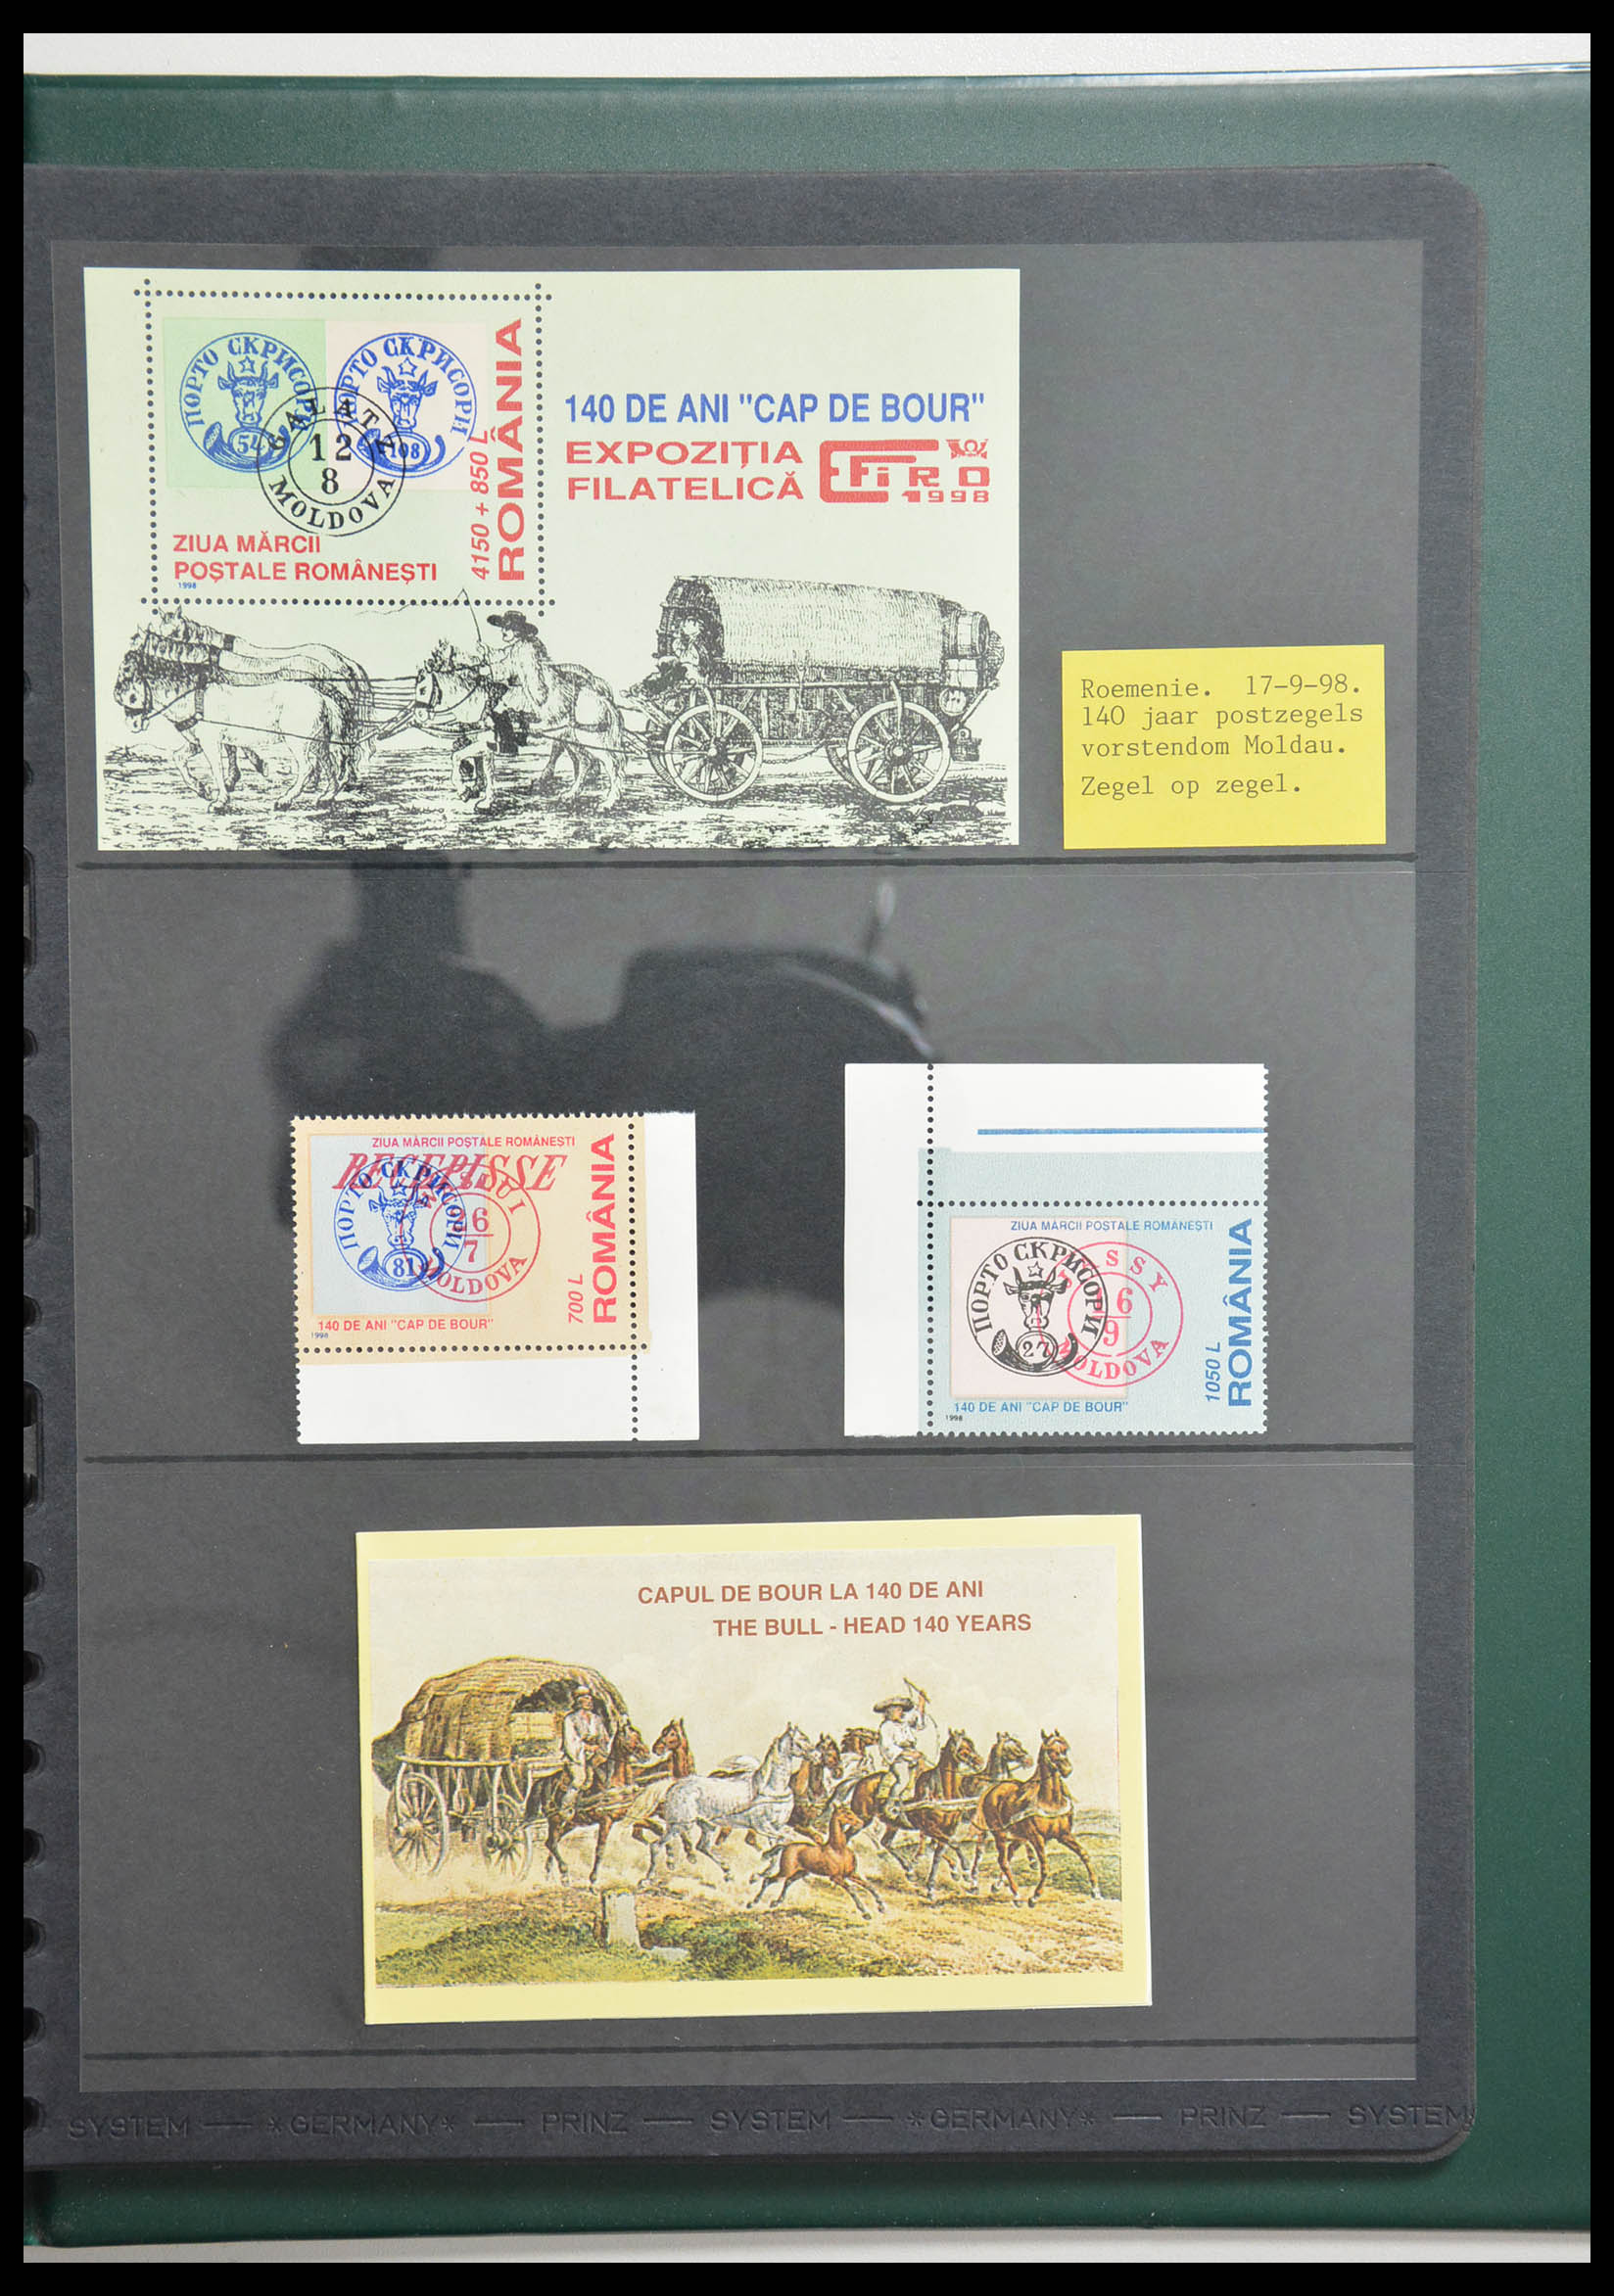 28337 084 - 28337 Postzegel op postzegel 1840-2001.